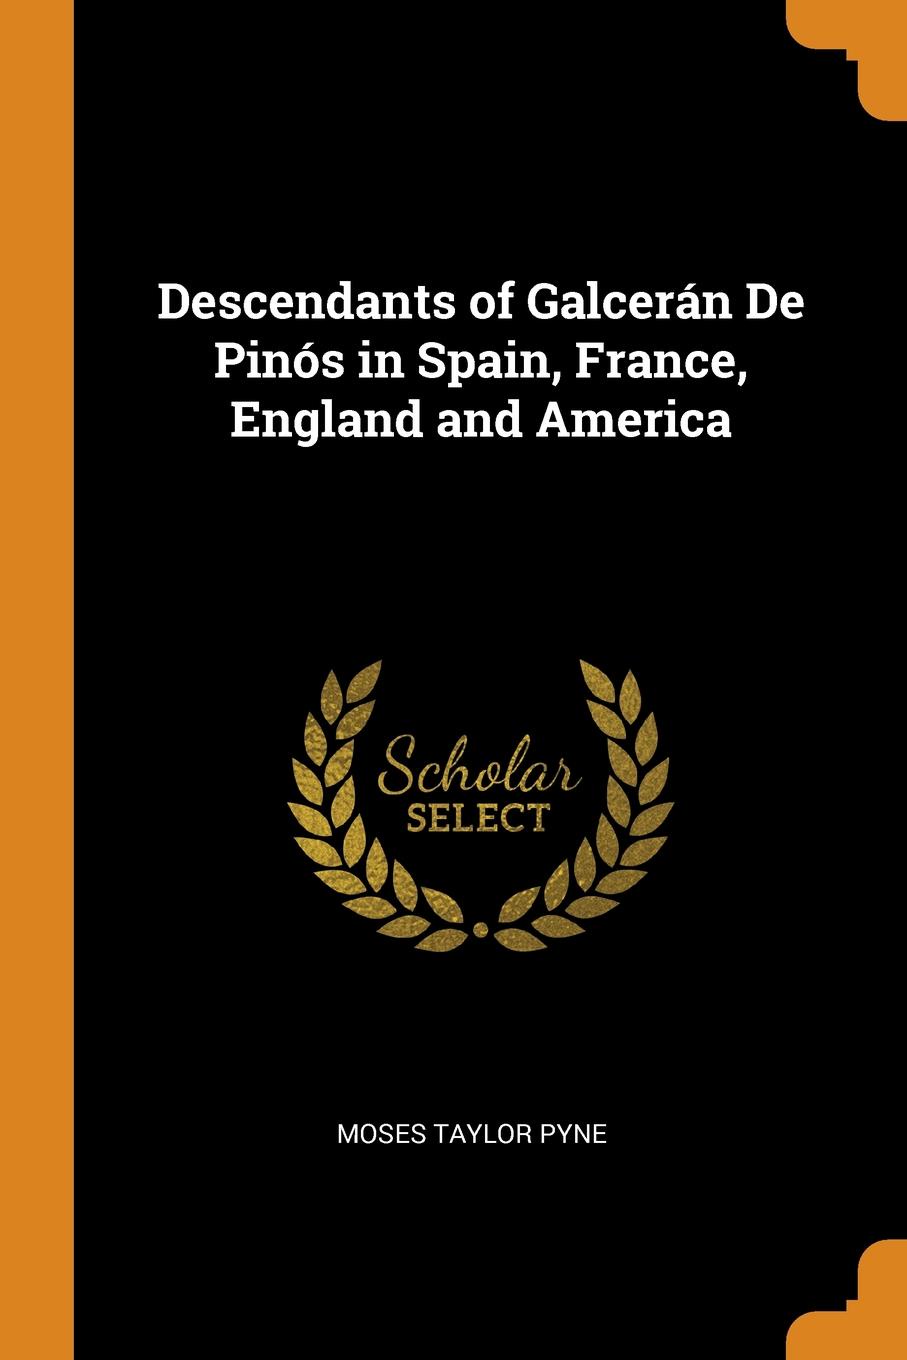 Descendants of Galceran De Pinos in Spain, France, England and America